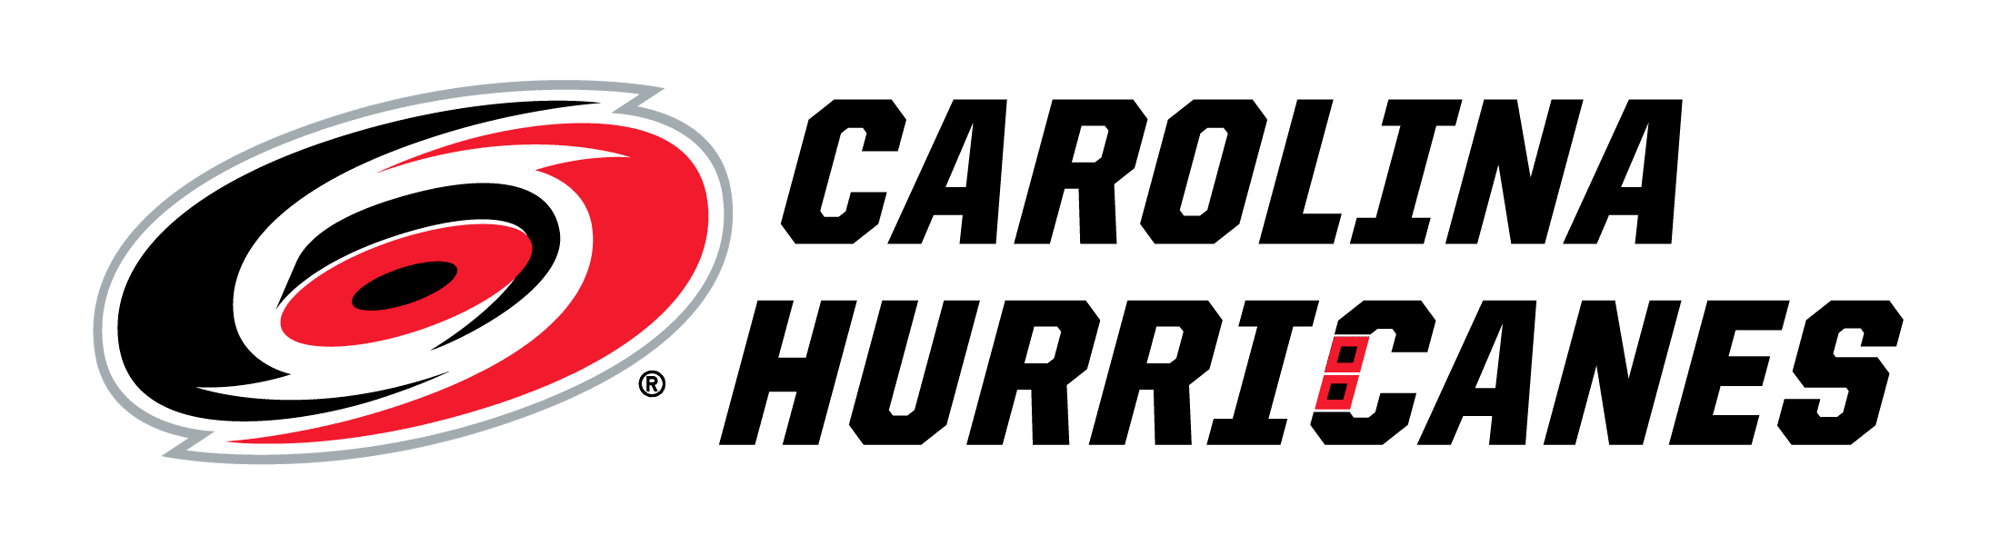 Carolina-Hurricanes_logo